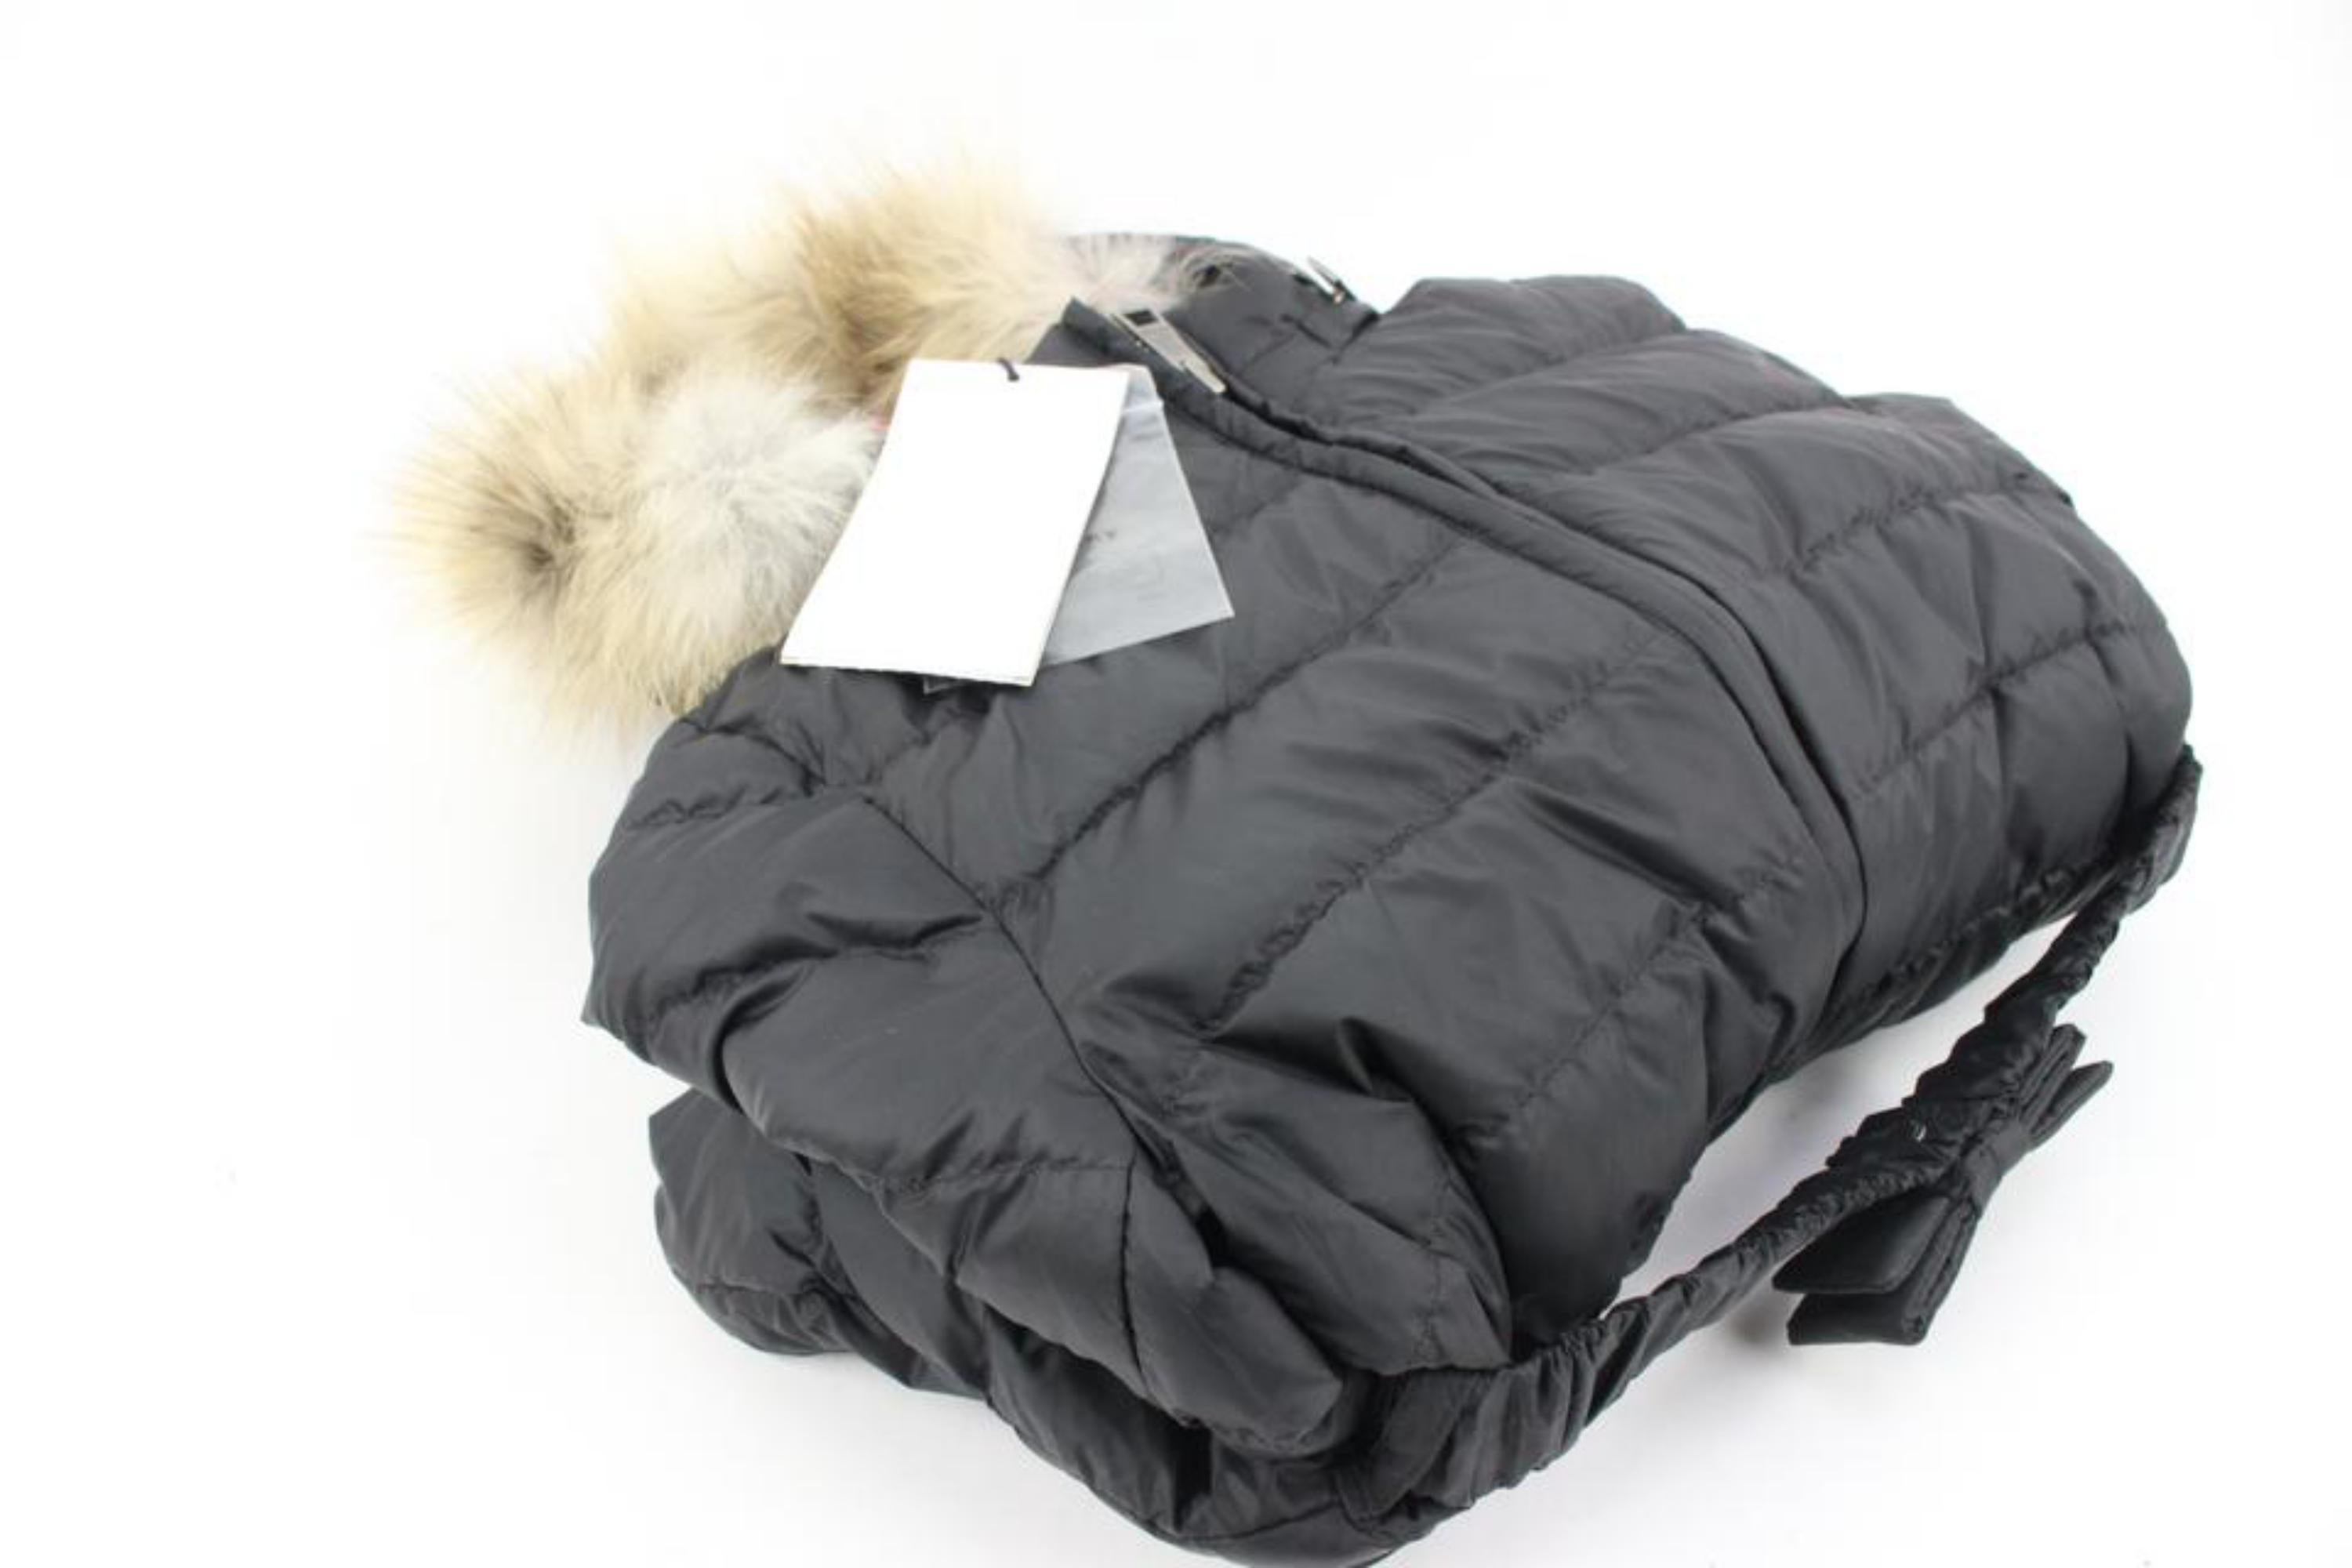 Burberry Children Kid's 7Y Black Puffer Fur Trimmed Coat Winter Jacket 124b16
Date Code/Serial Number: CNGUATRI8PAN
Made In: China
Measurements: Length:  14